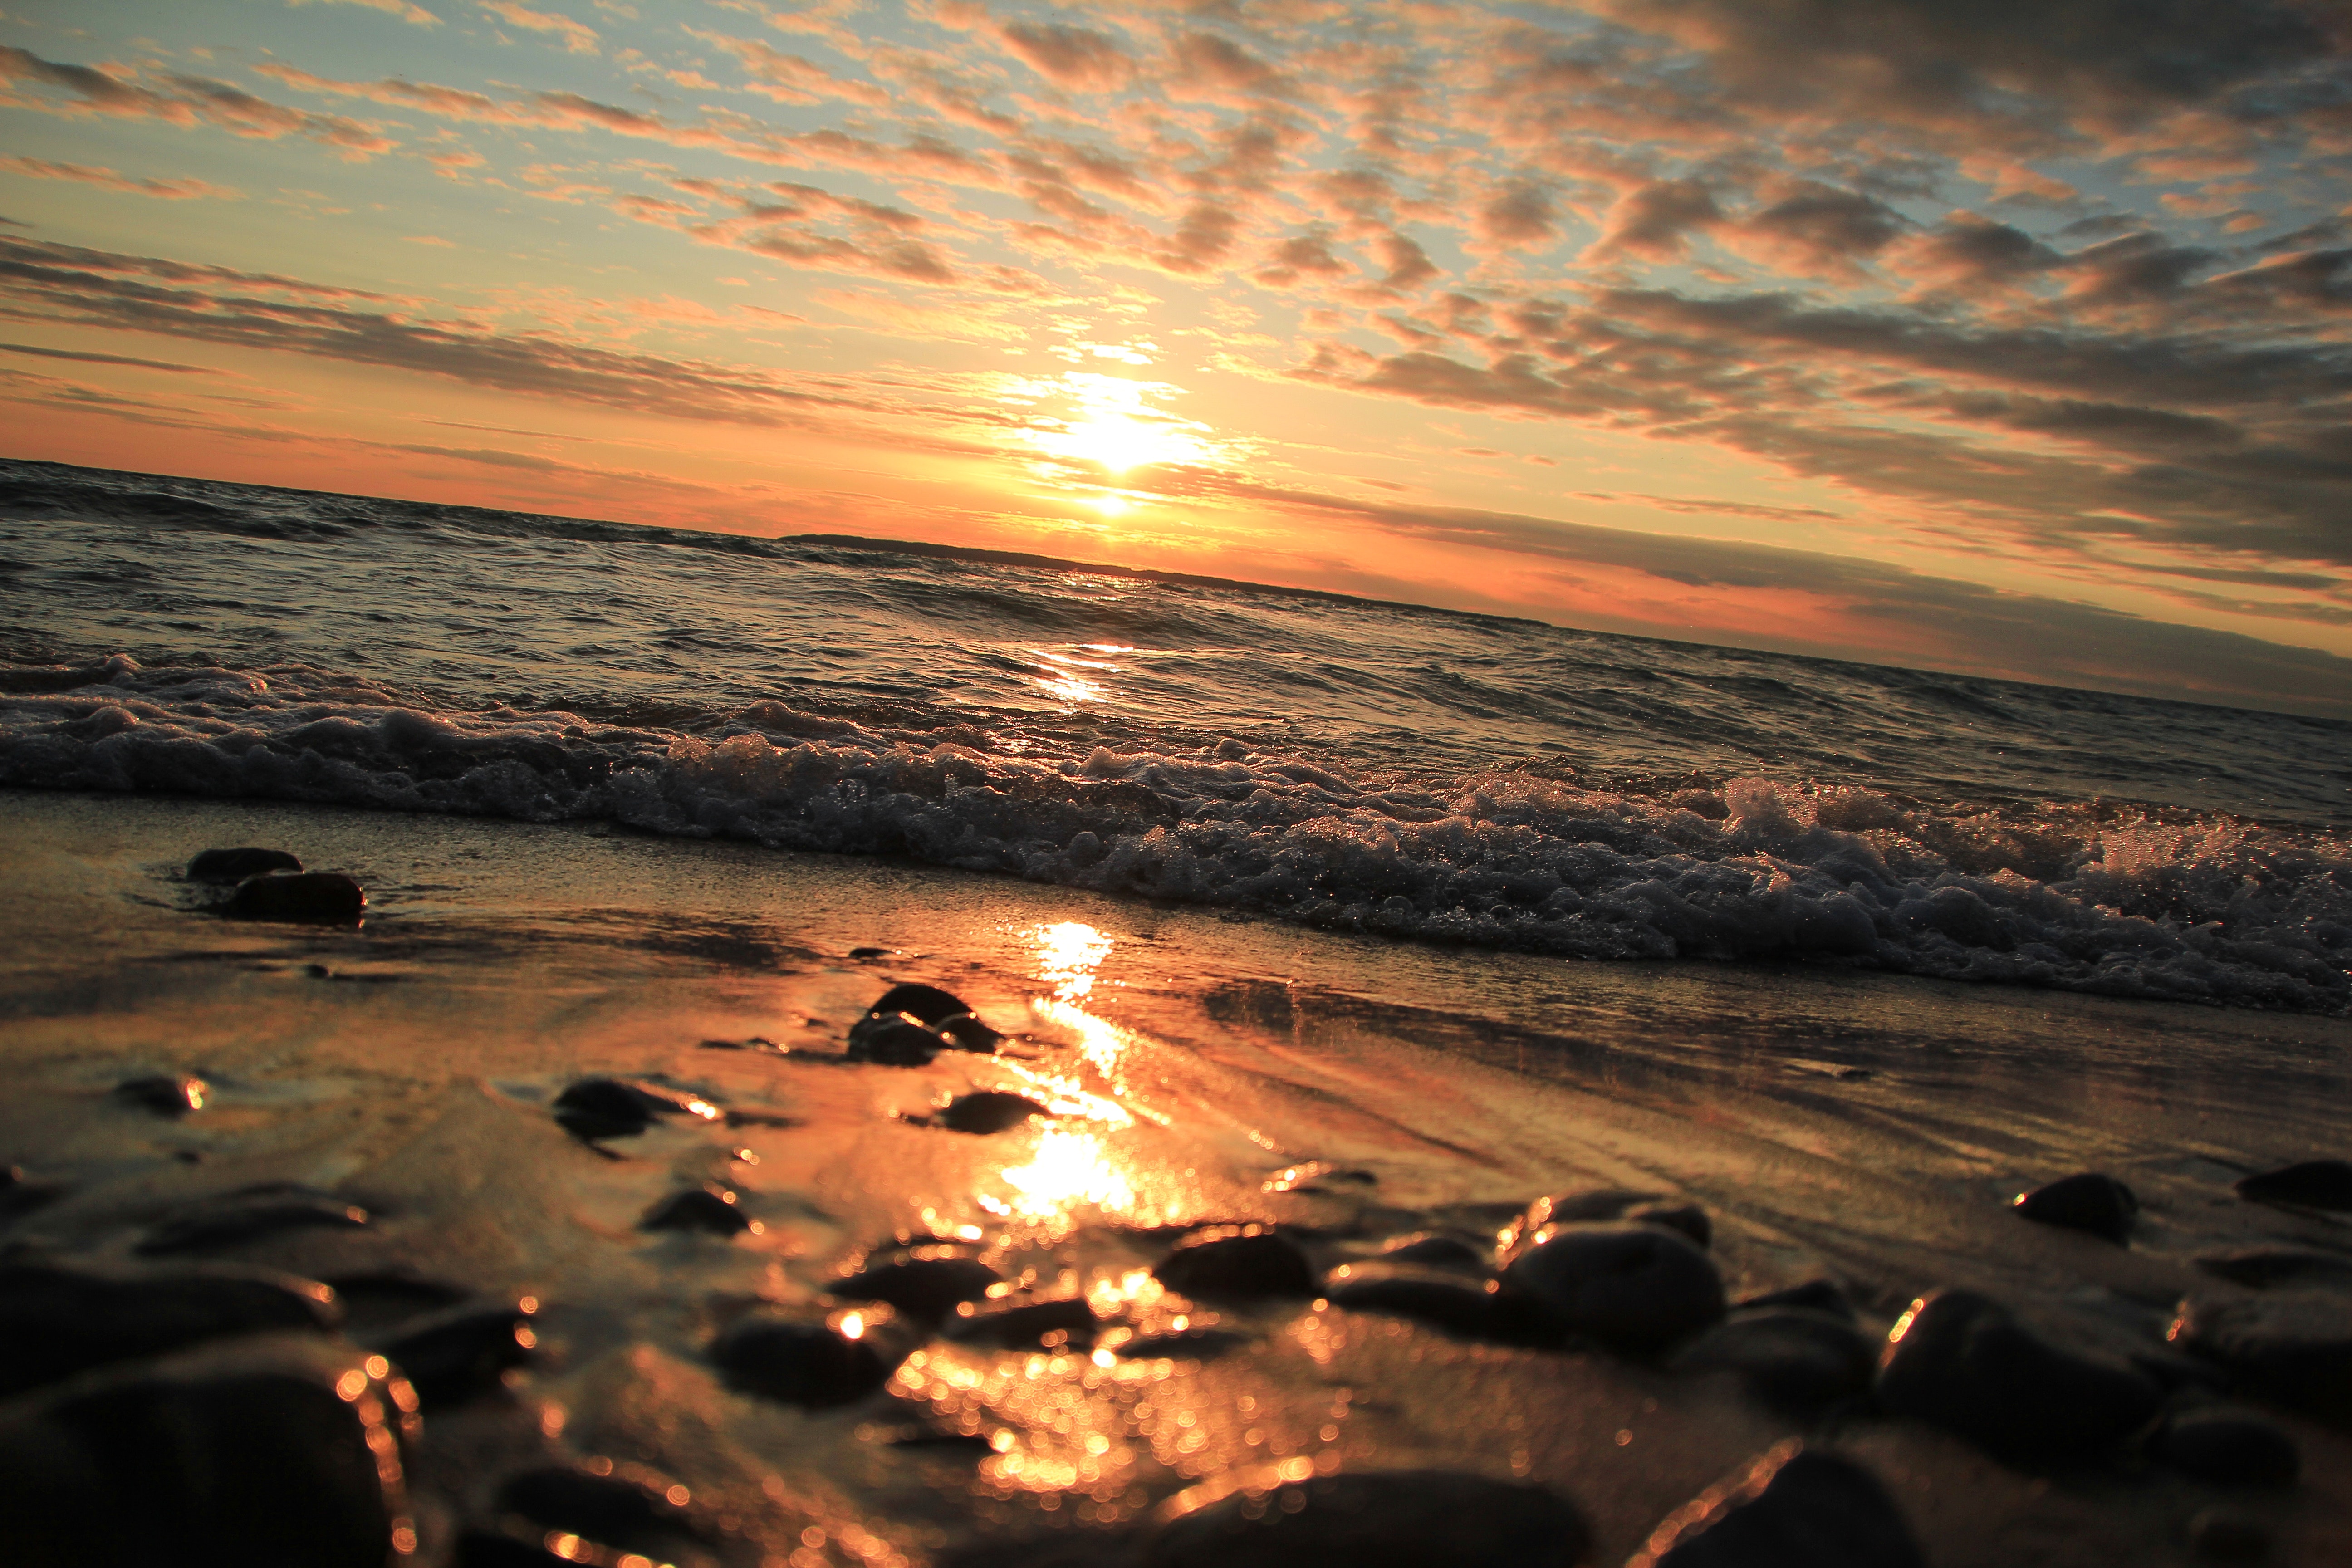 Ocean Taken Photo during Sunset, Beach, Outdoors, Water, Travel, HQ Photo